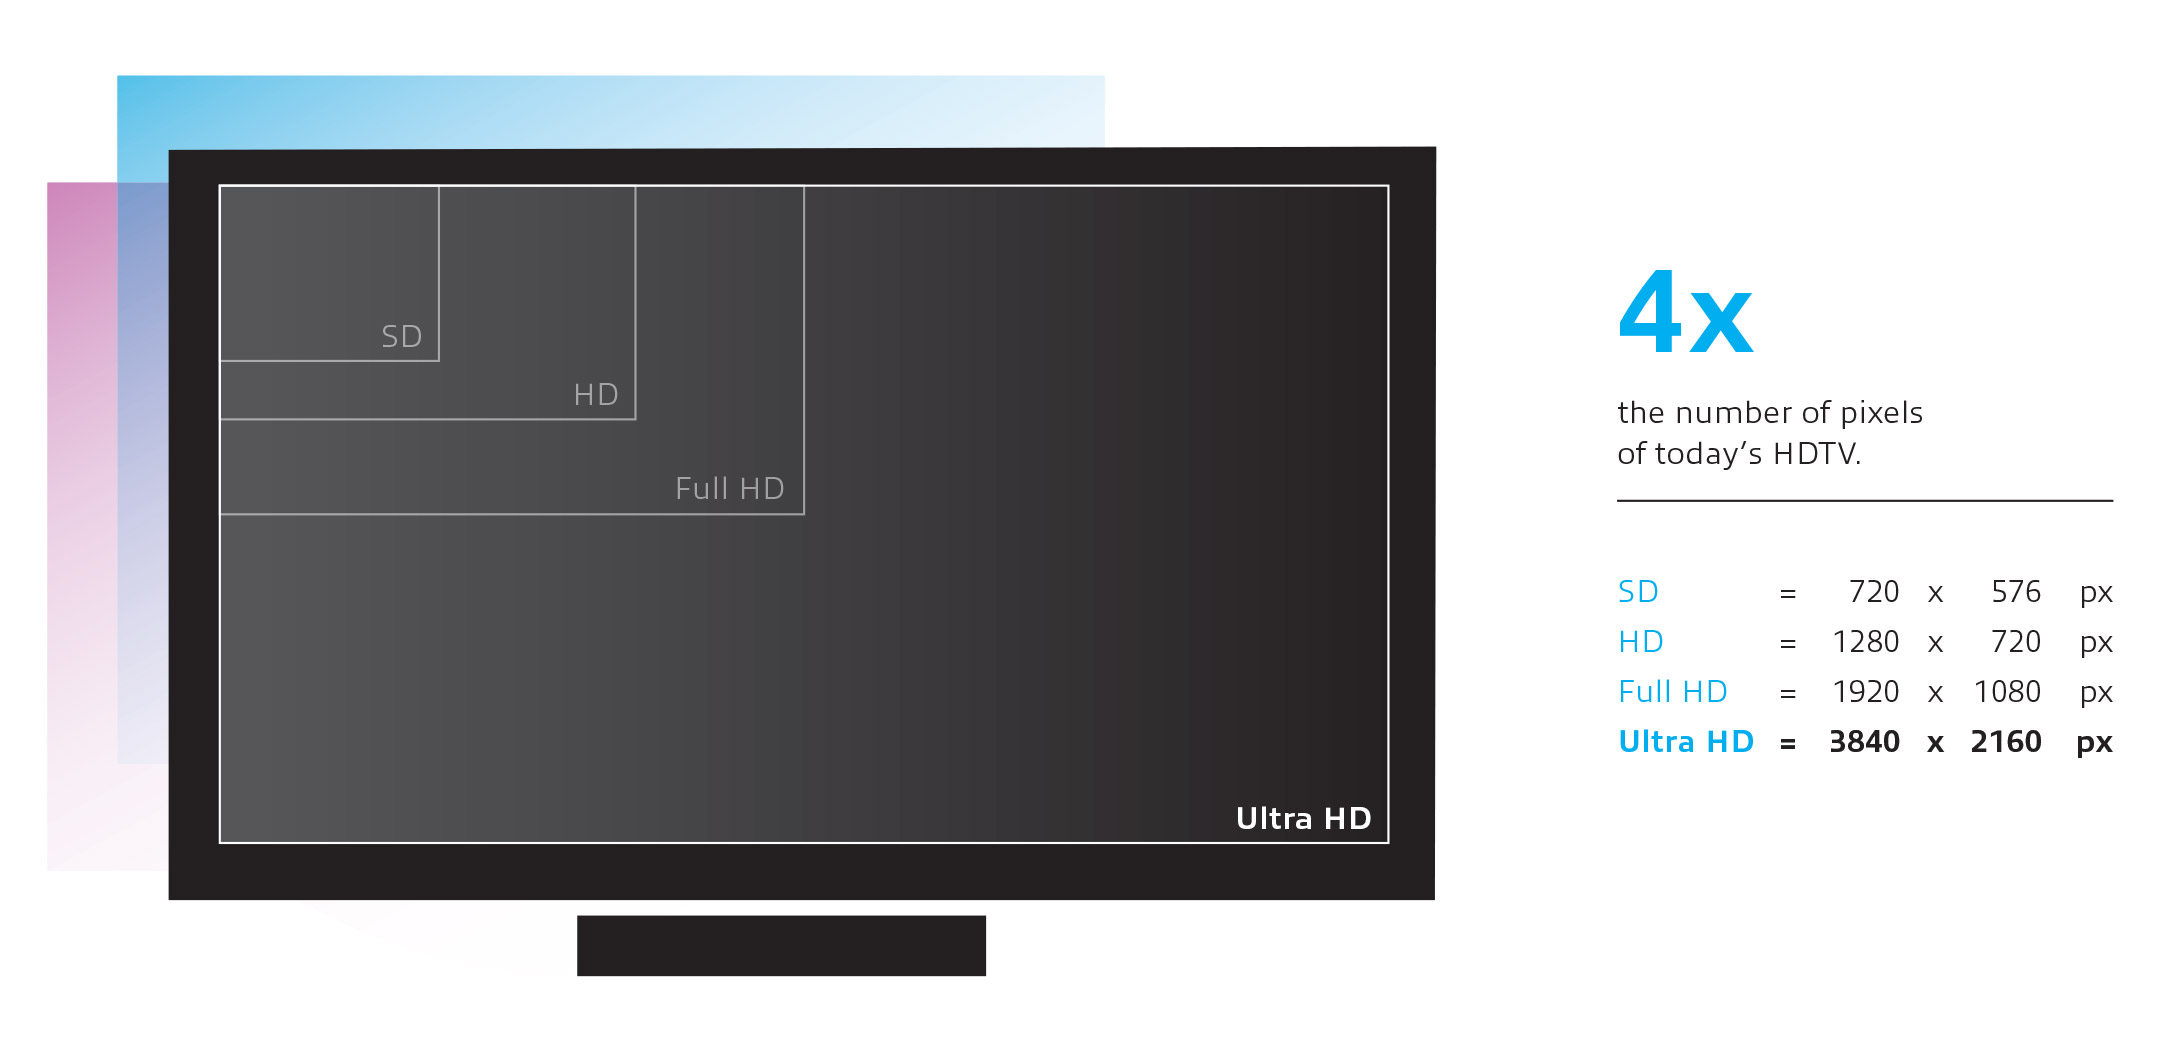 SES Astra lancia un nuovo canale demo in Ultra HD 